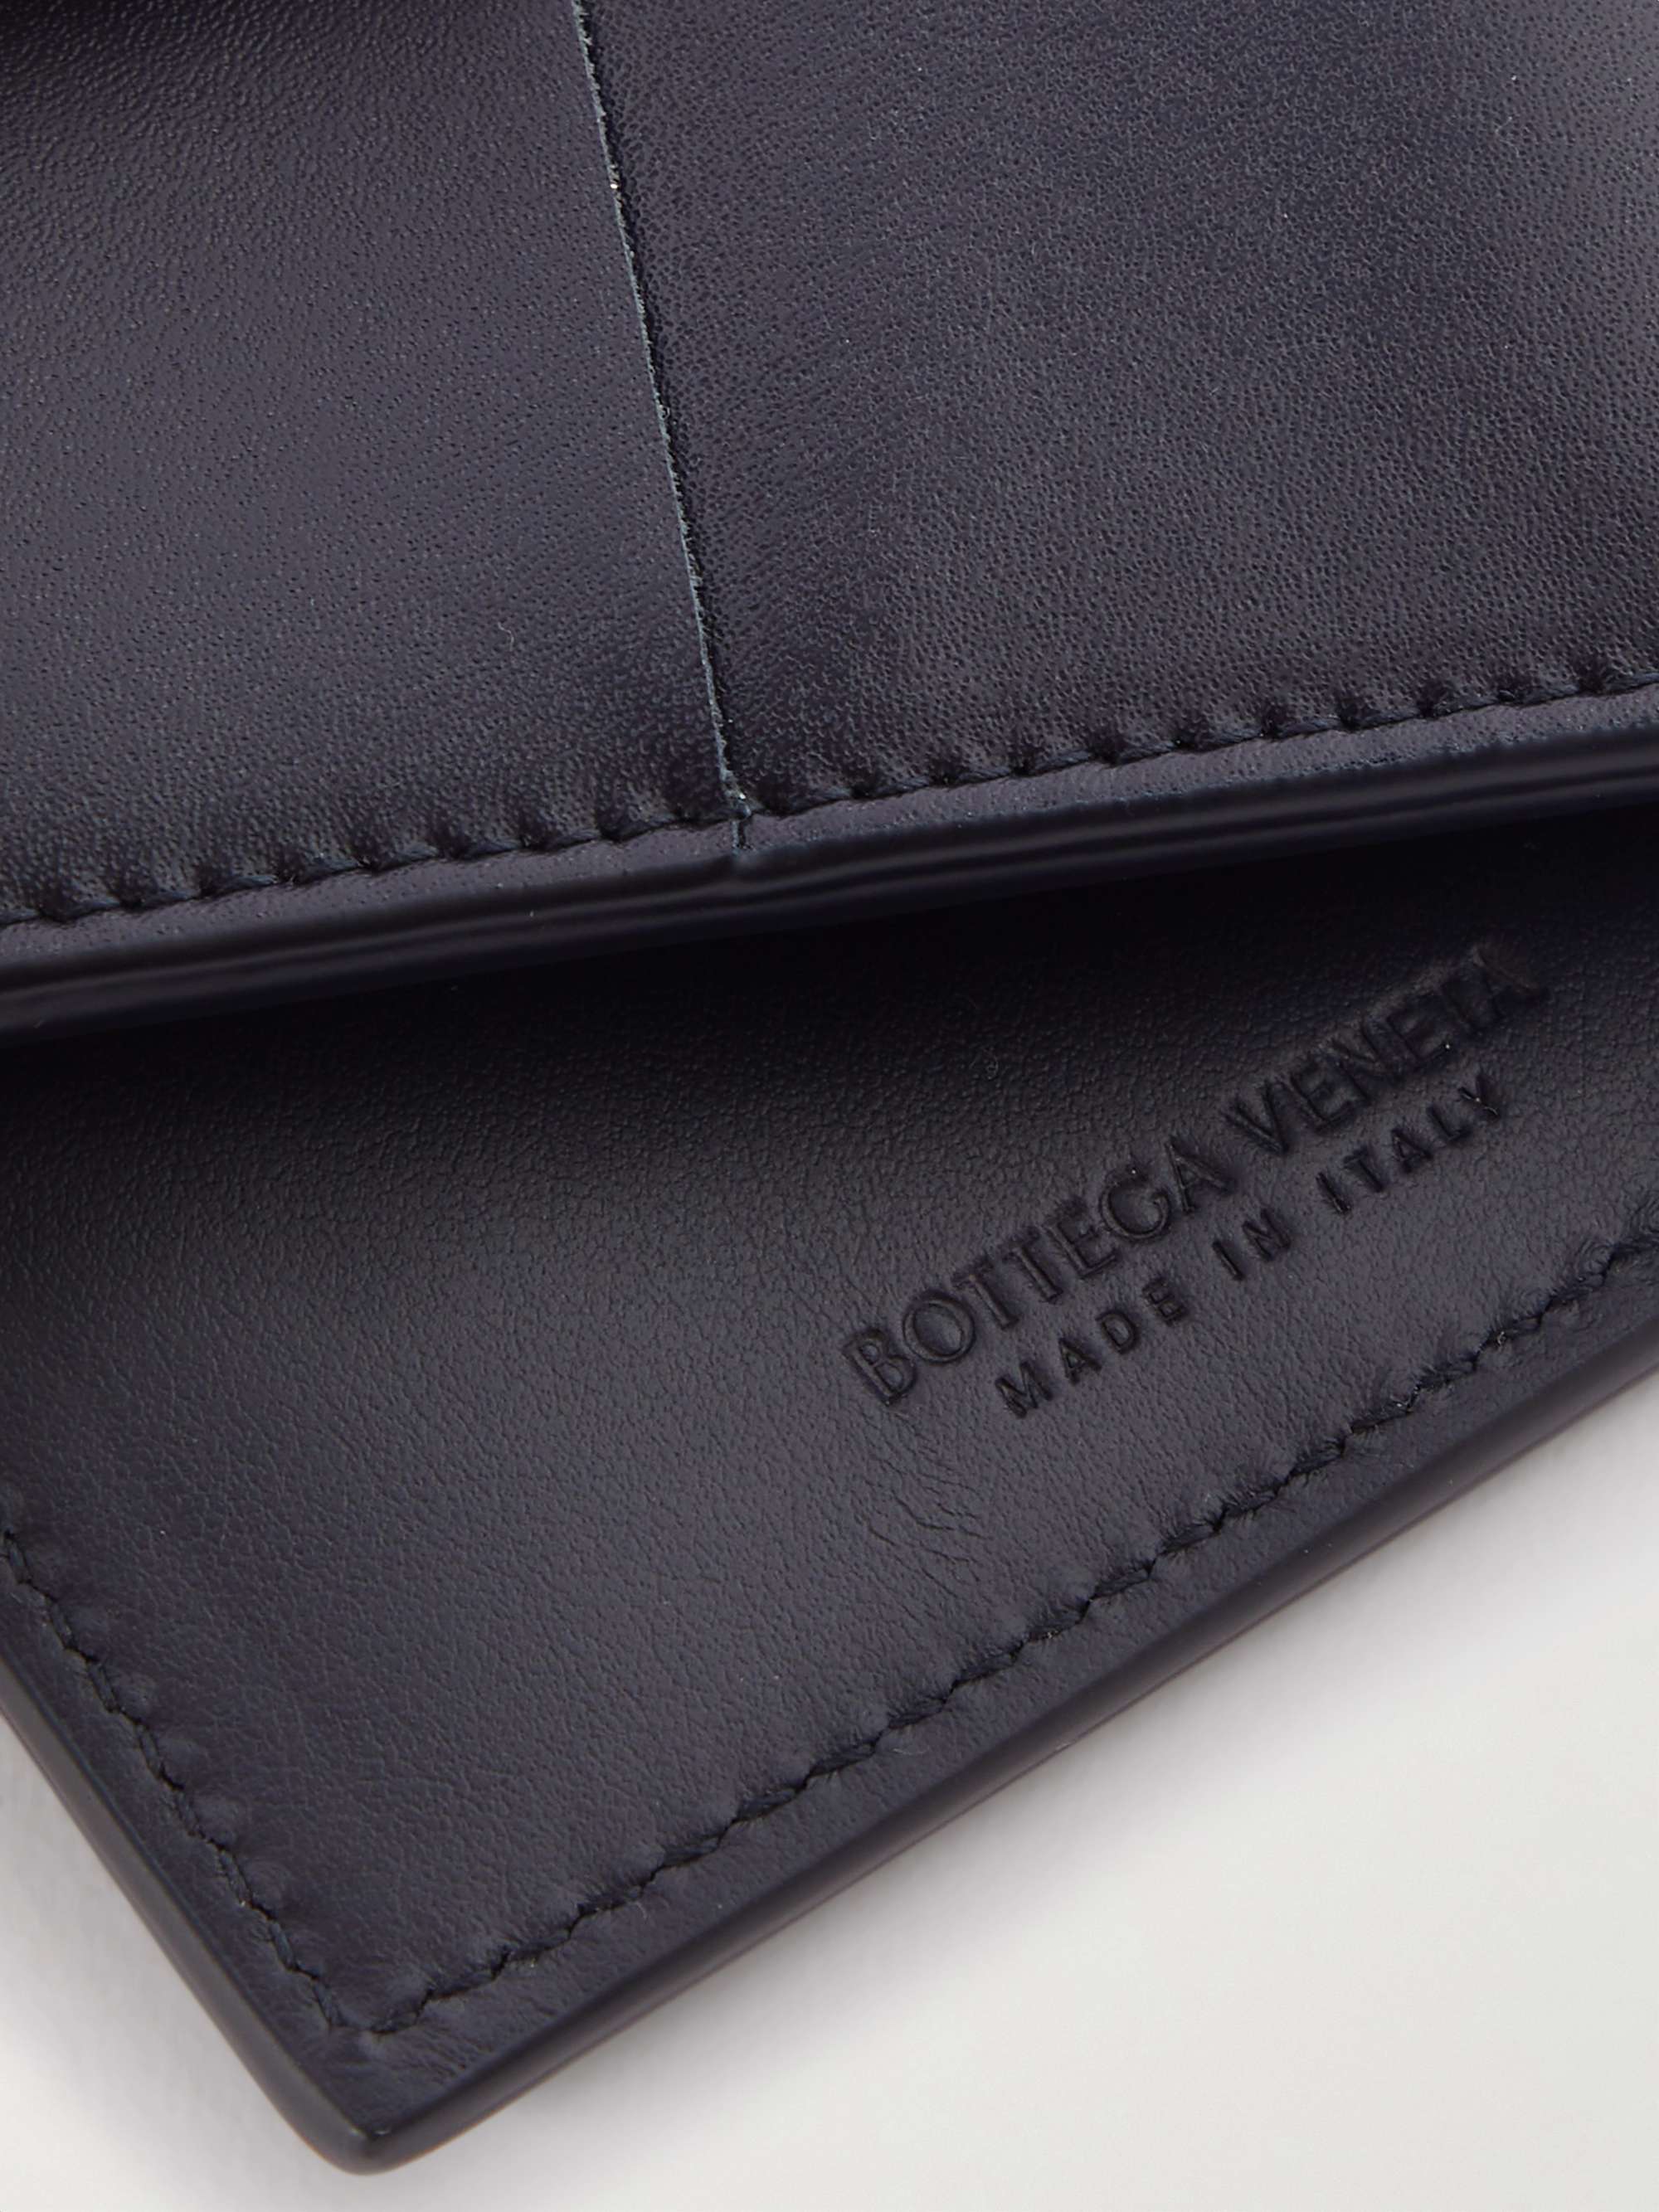 BOTTEGA VENETA Cassette Intrecciato Leather Billfold Wallet